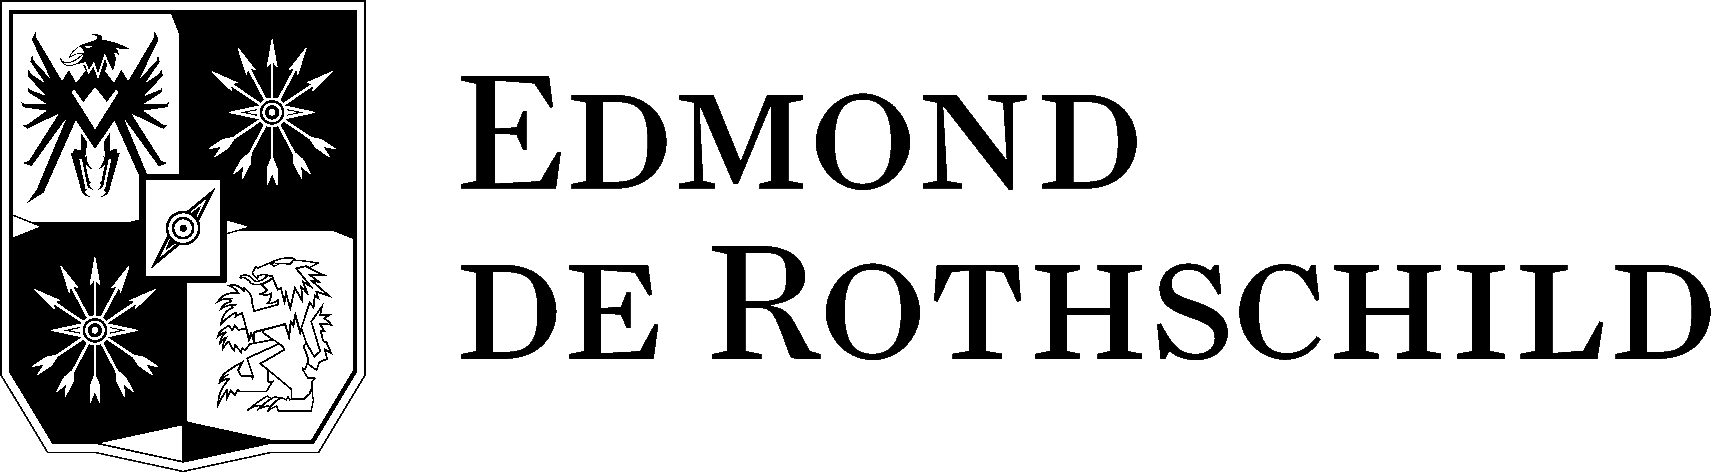 Edmond de Rothschild Logo 1